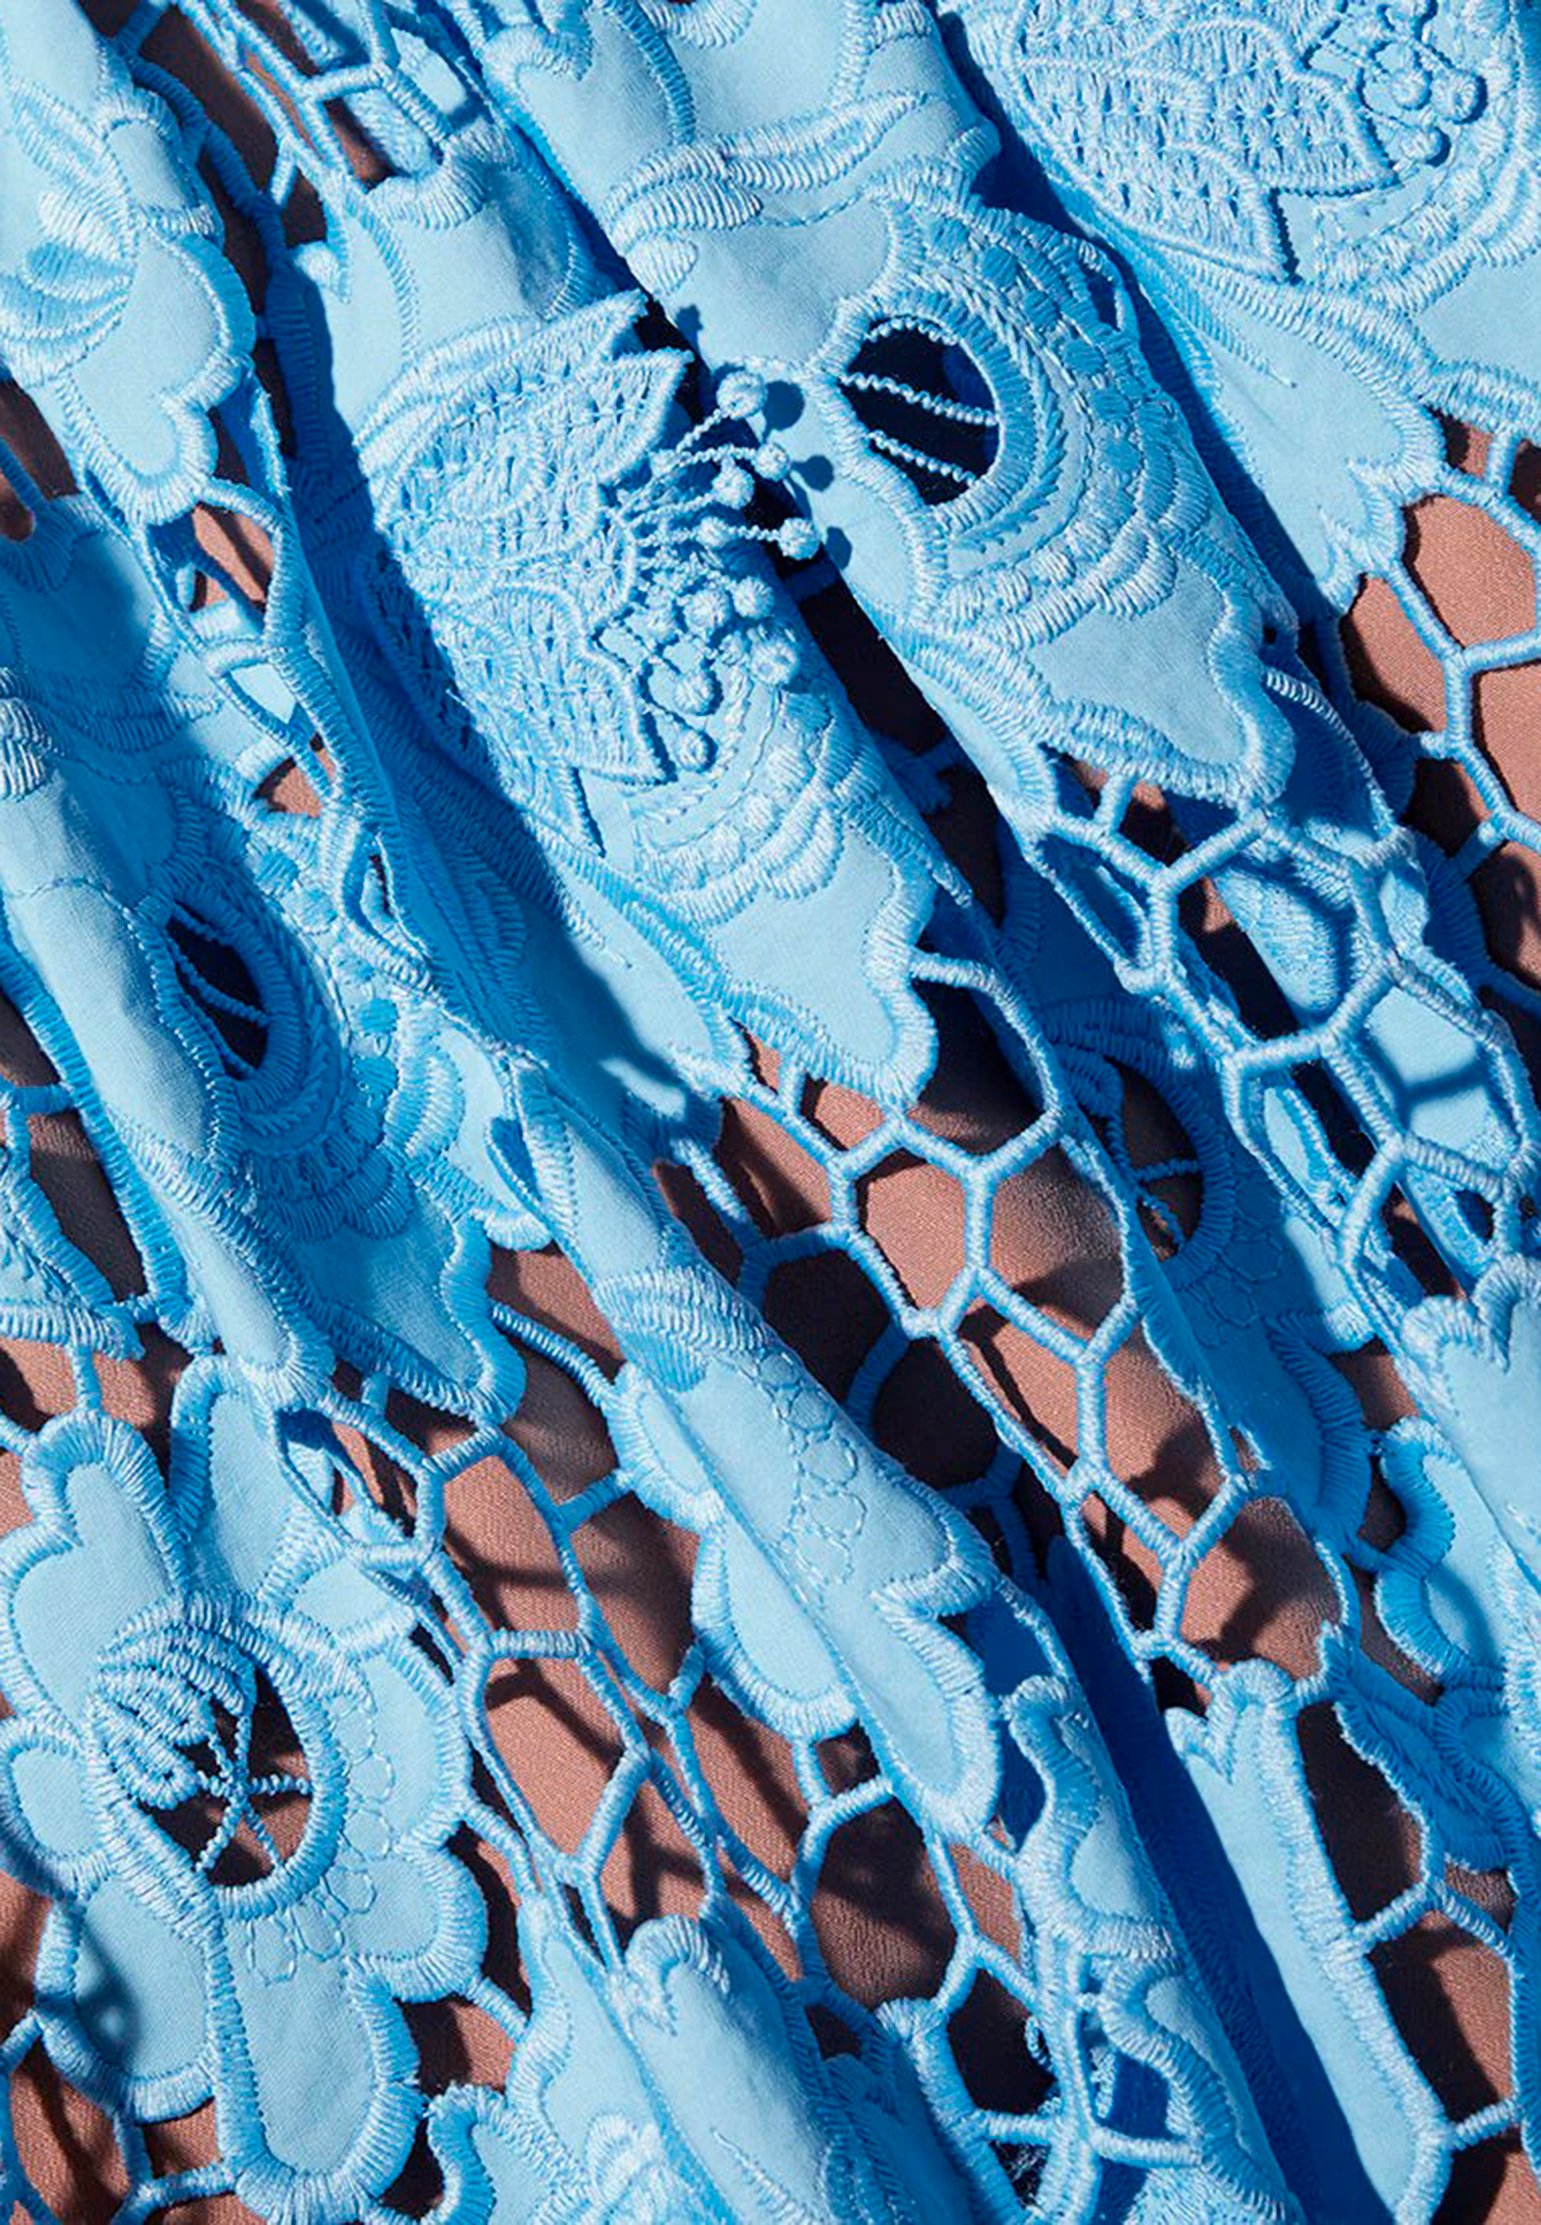 Dress SELF-PORTRAIT Color: blue (Code: 1794) in online store Allure